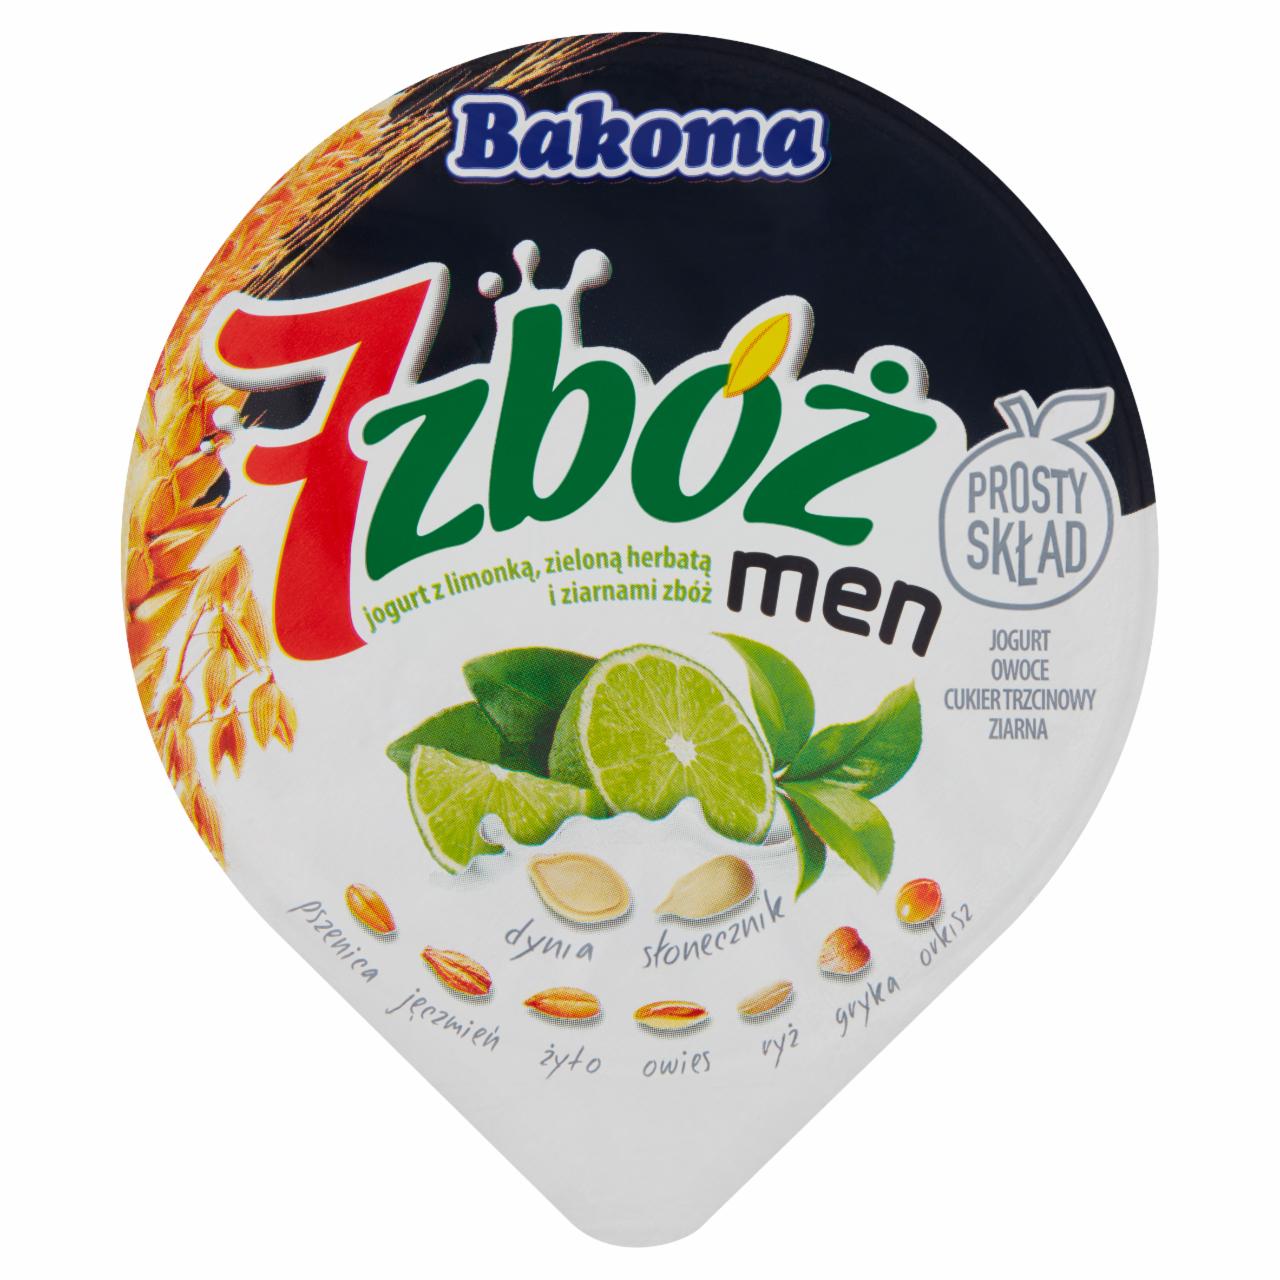 Photo - Bakoma 7 zbóż men Yoghurt with Lime Green Tea and Cereal 300 g